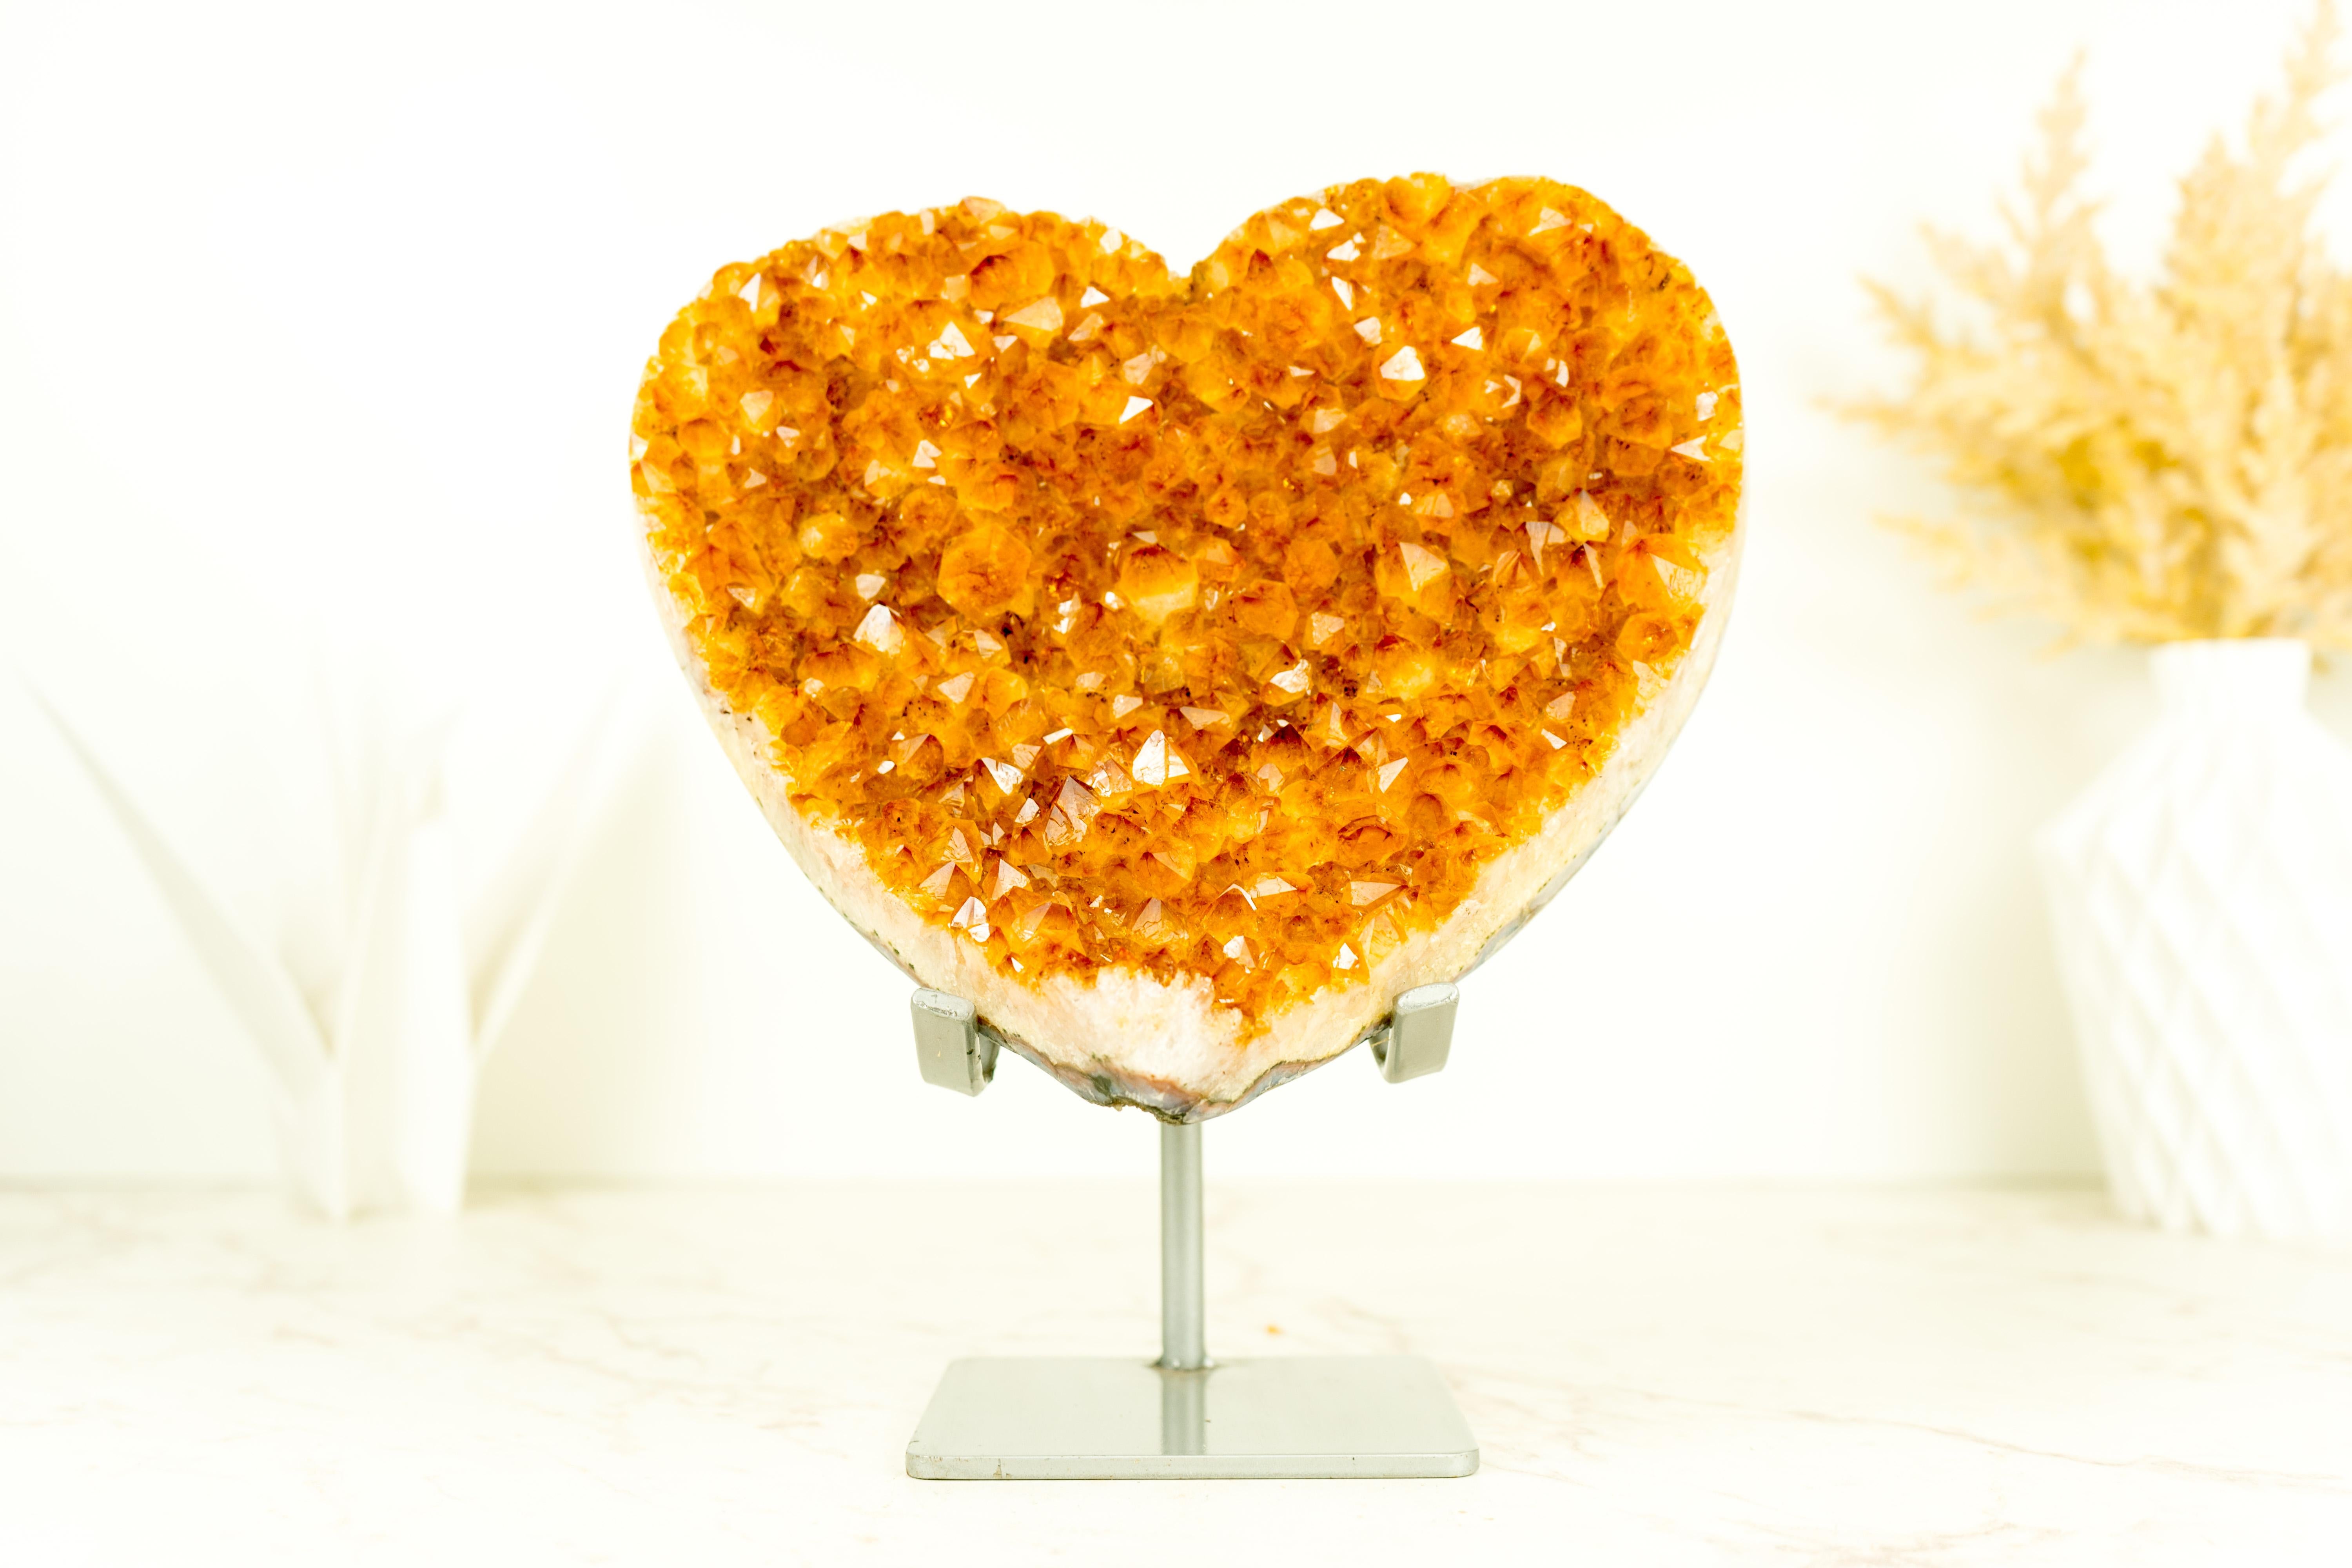 Brazilian Crystal Citrine Heart Sculpture with Deep Orange, Shiny High-Grade Citrine Druzy For Sale